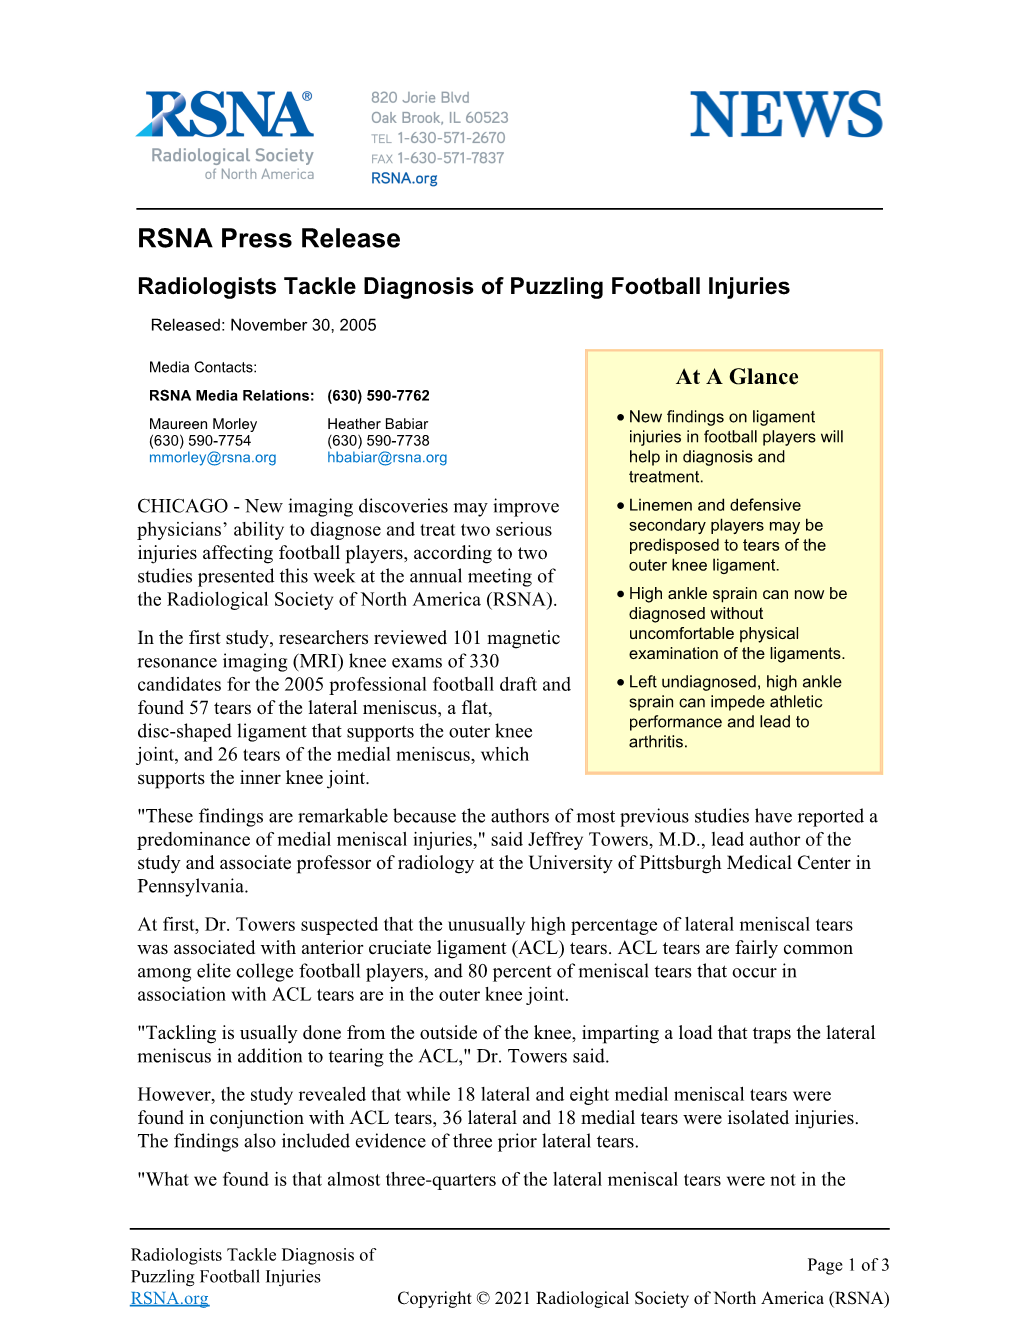 RSNA Press Releases